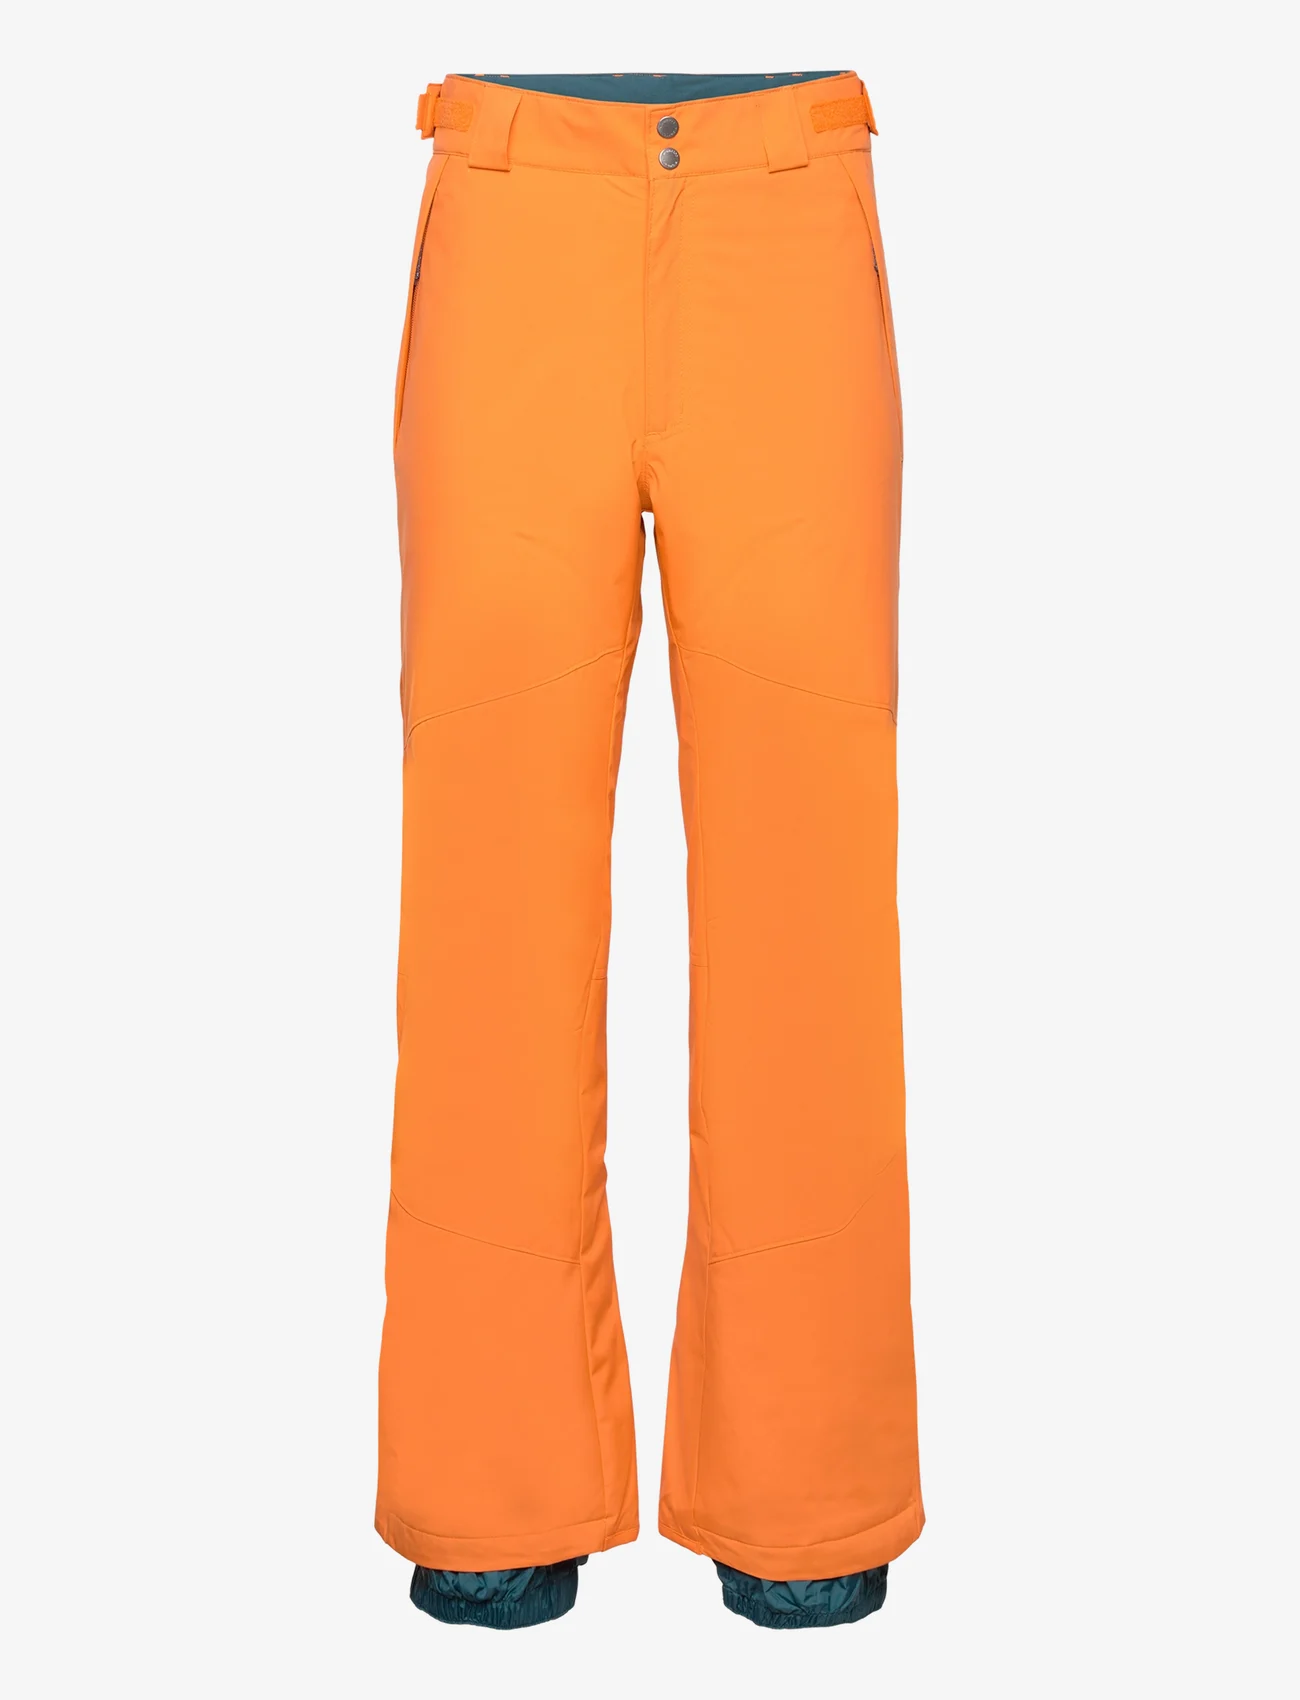 Columbia Sportswear - Shafer Canyon Pant - hiihtohousut - bright orange - 0